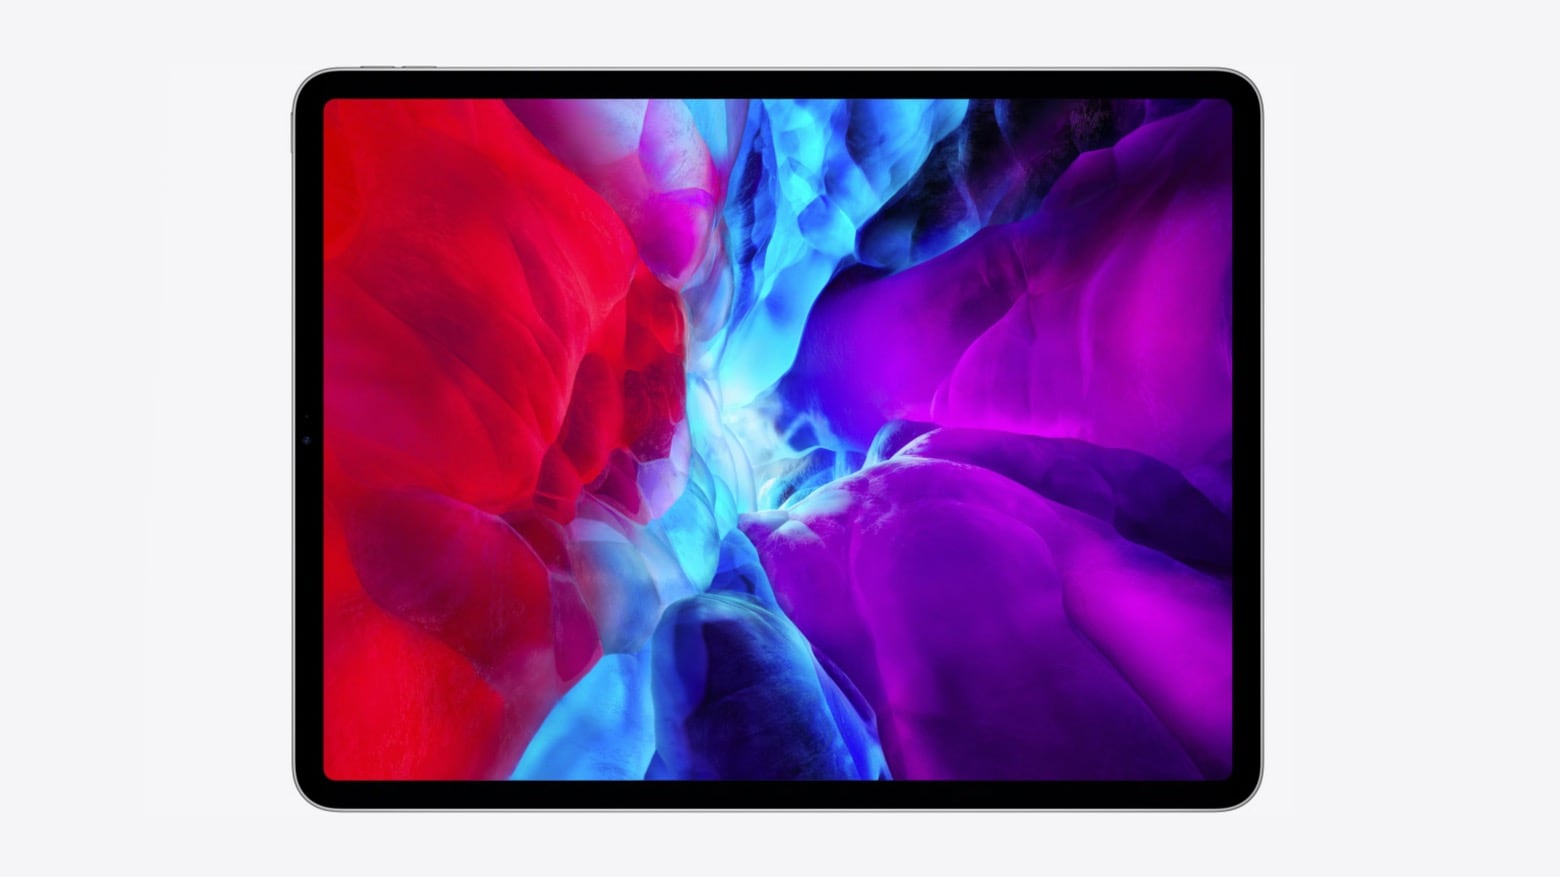 Benchmarks reveal 2020 iPad Pro barely